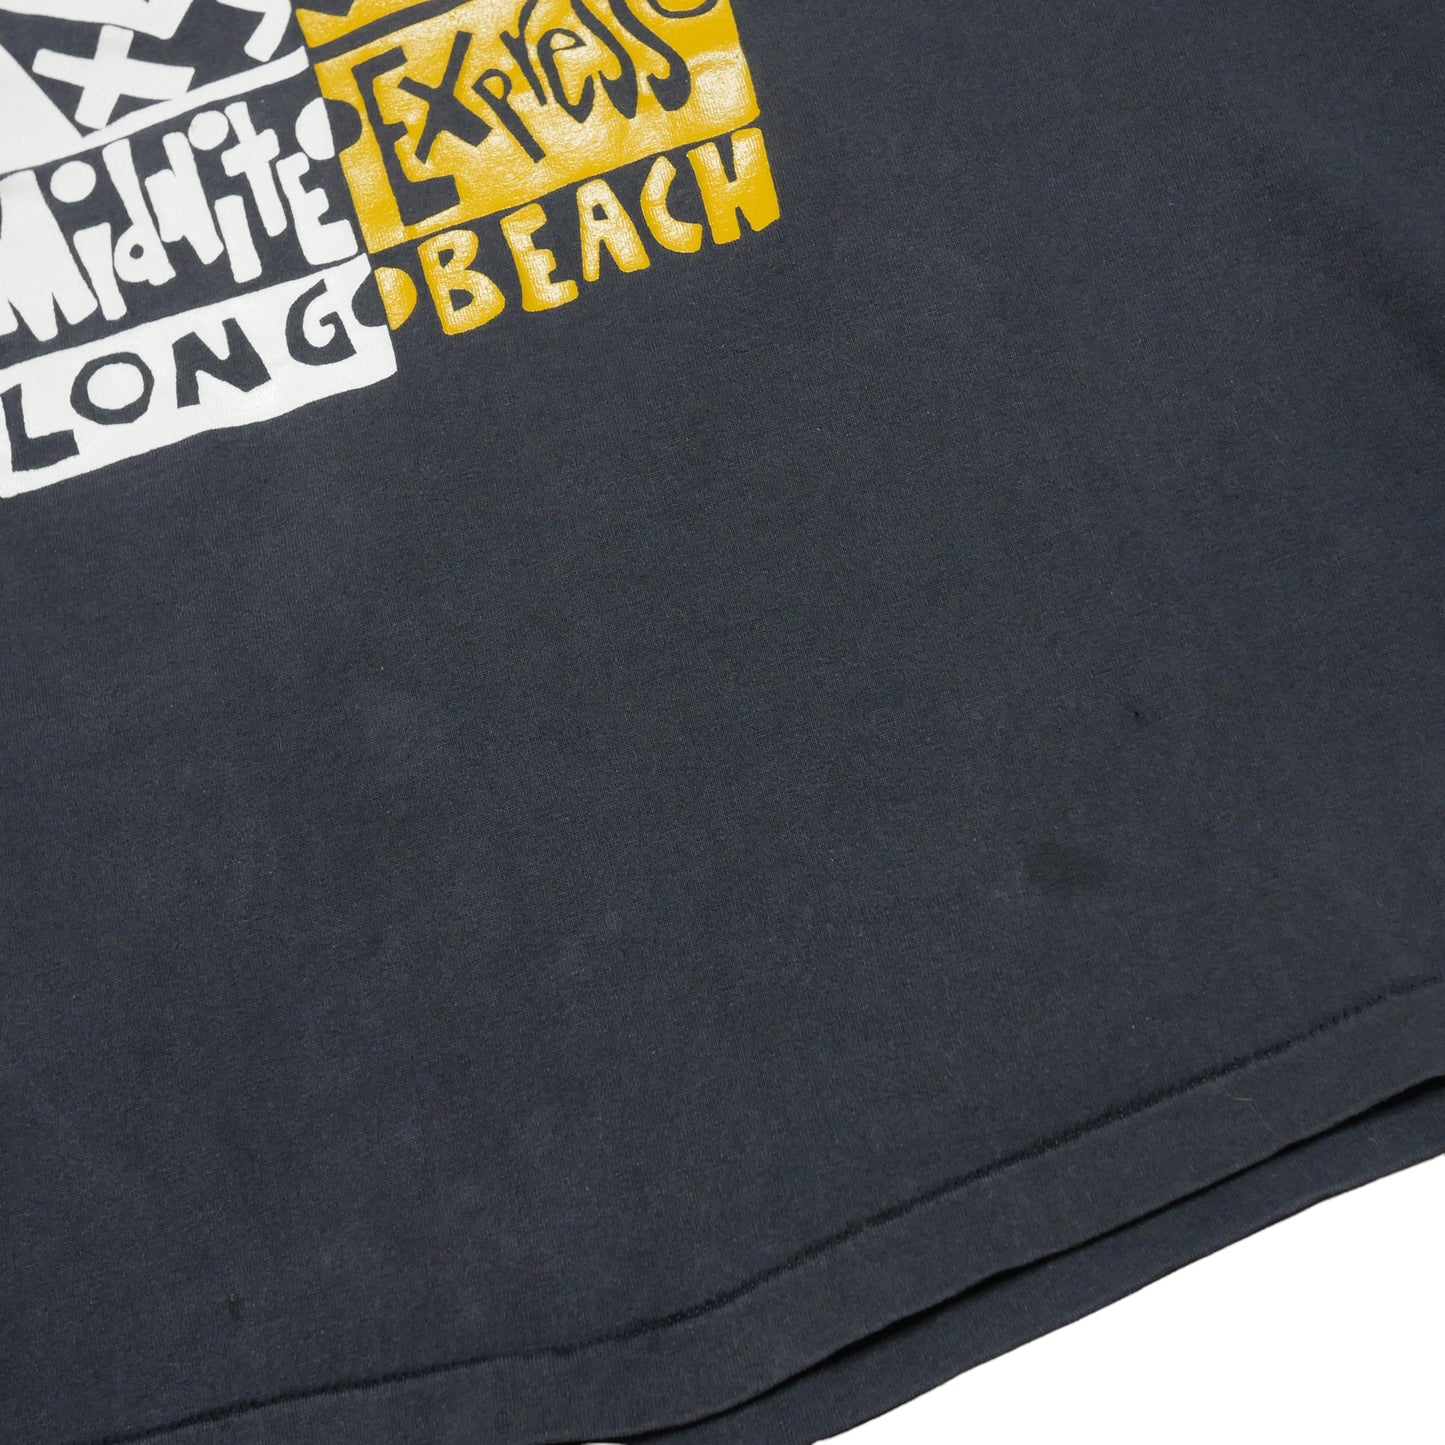 Java Club Midnite Expresso Long Beach Shirt - XL